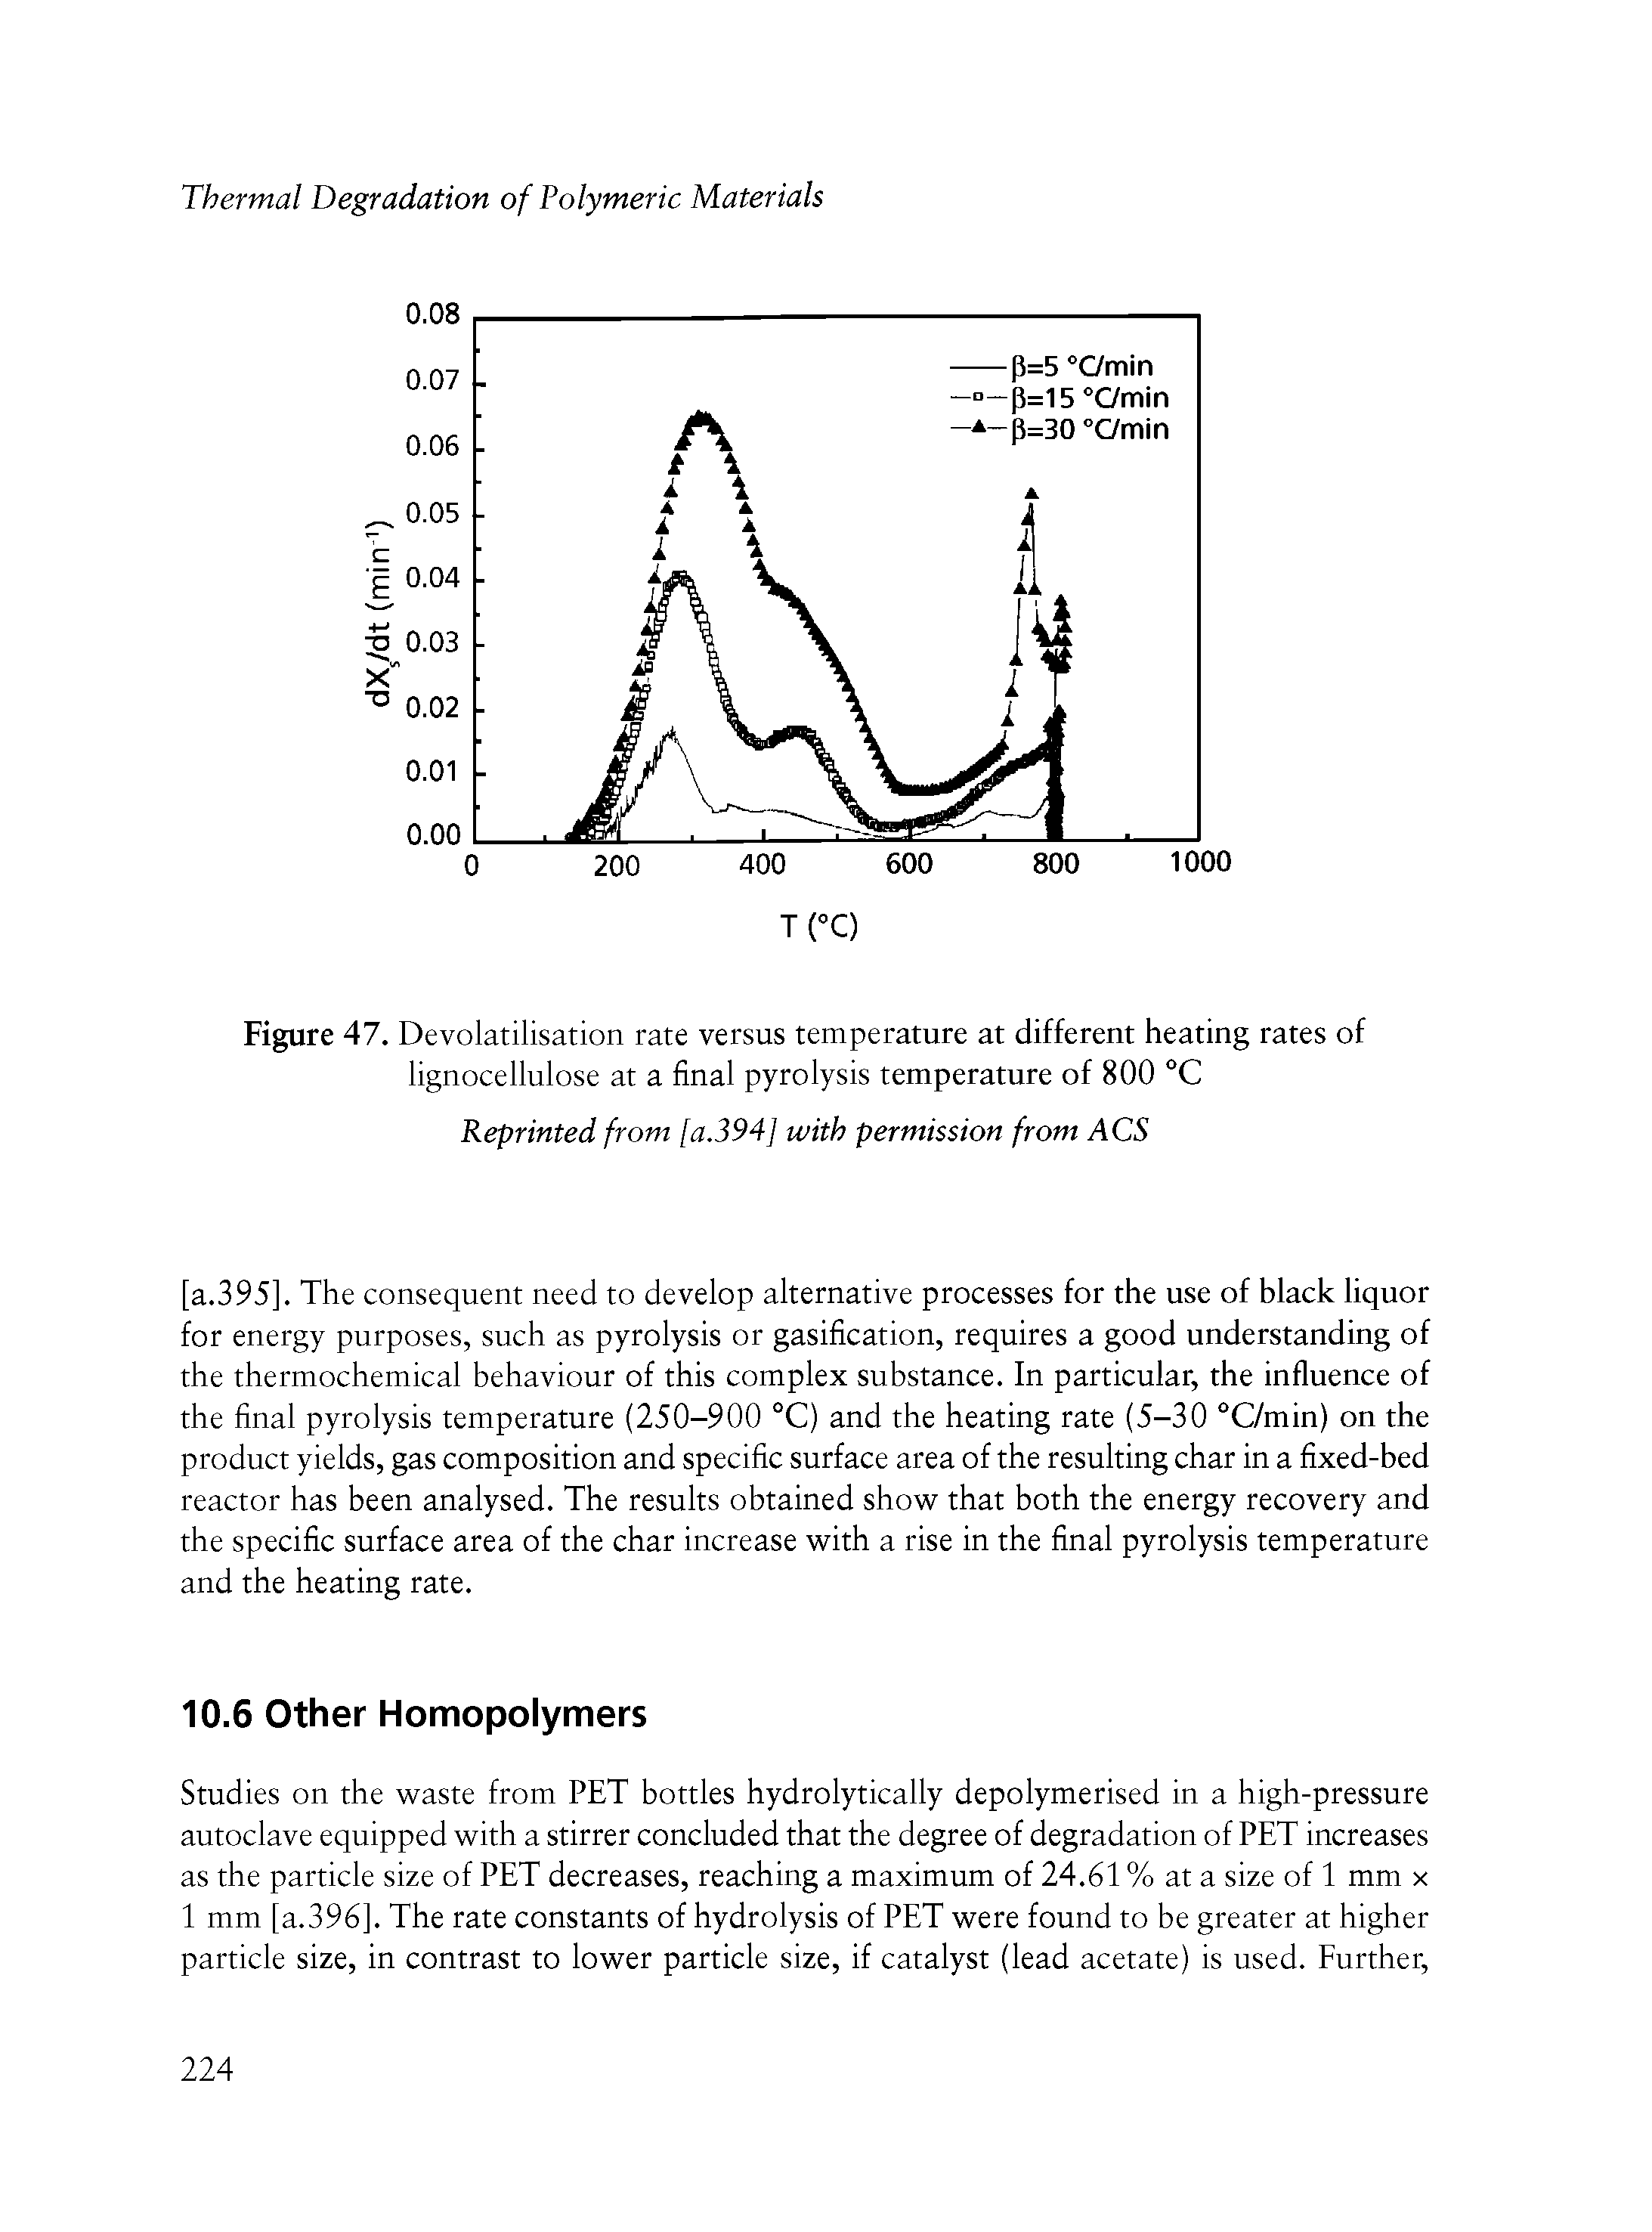 Figure 47. Devolatilisation rate versus temperature at different heating rates of lignocellnlose at a final pyrolysis temperature of 800 "C...